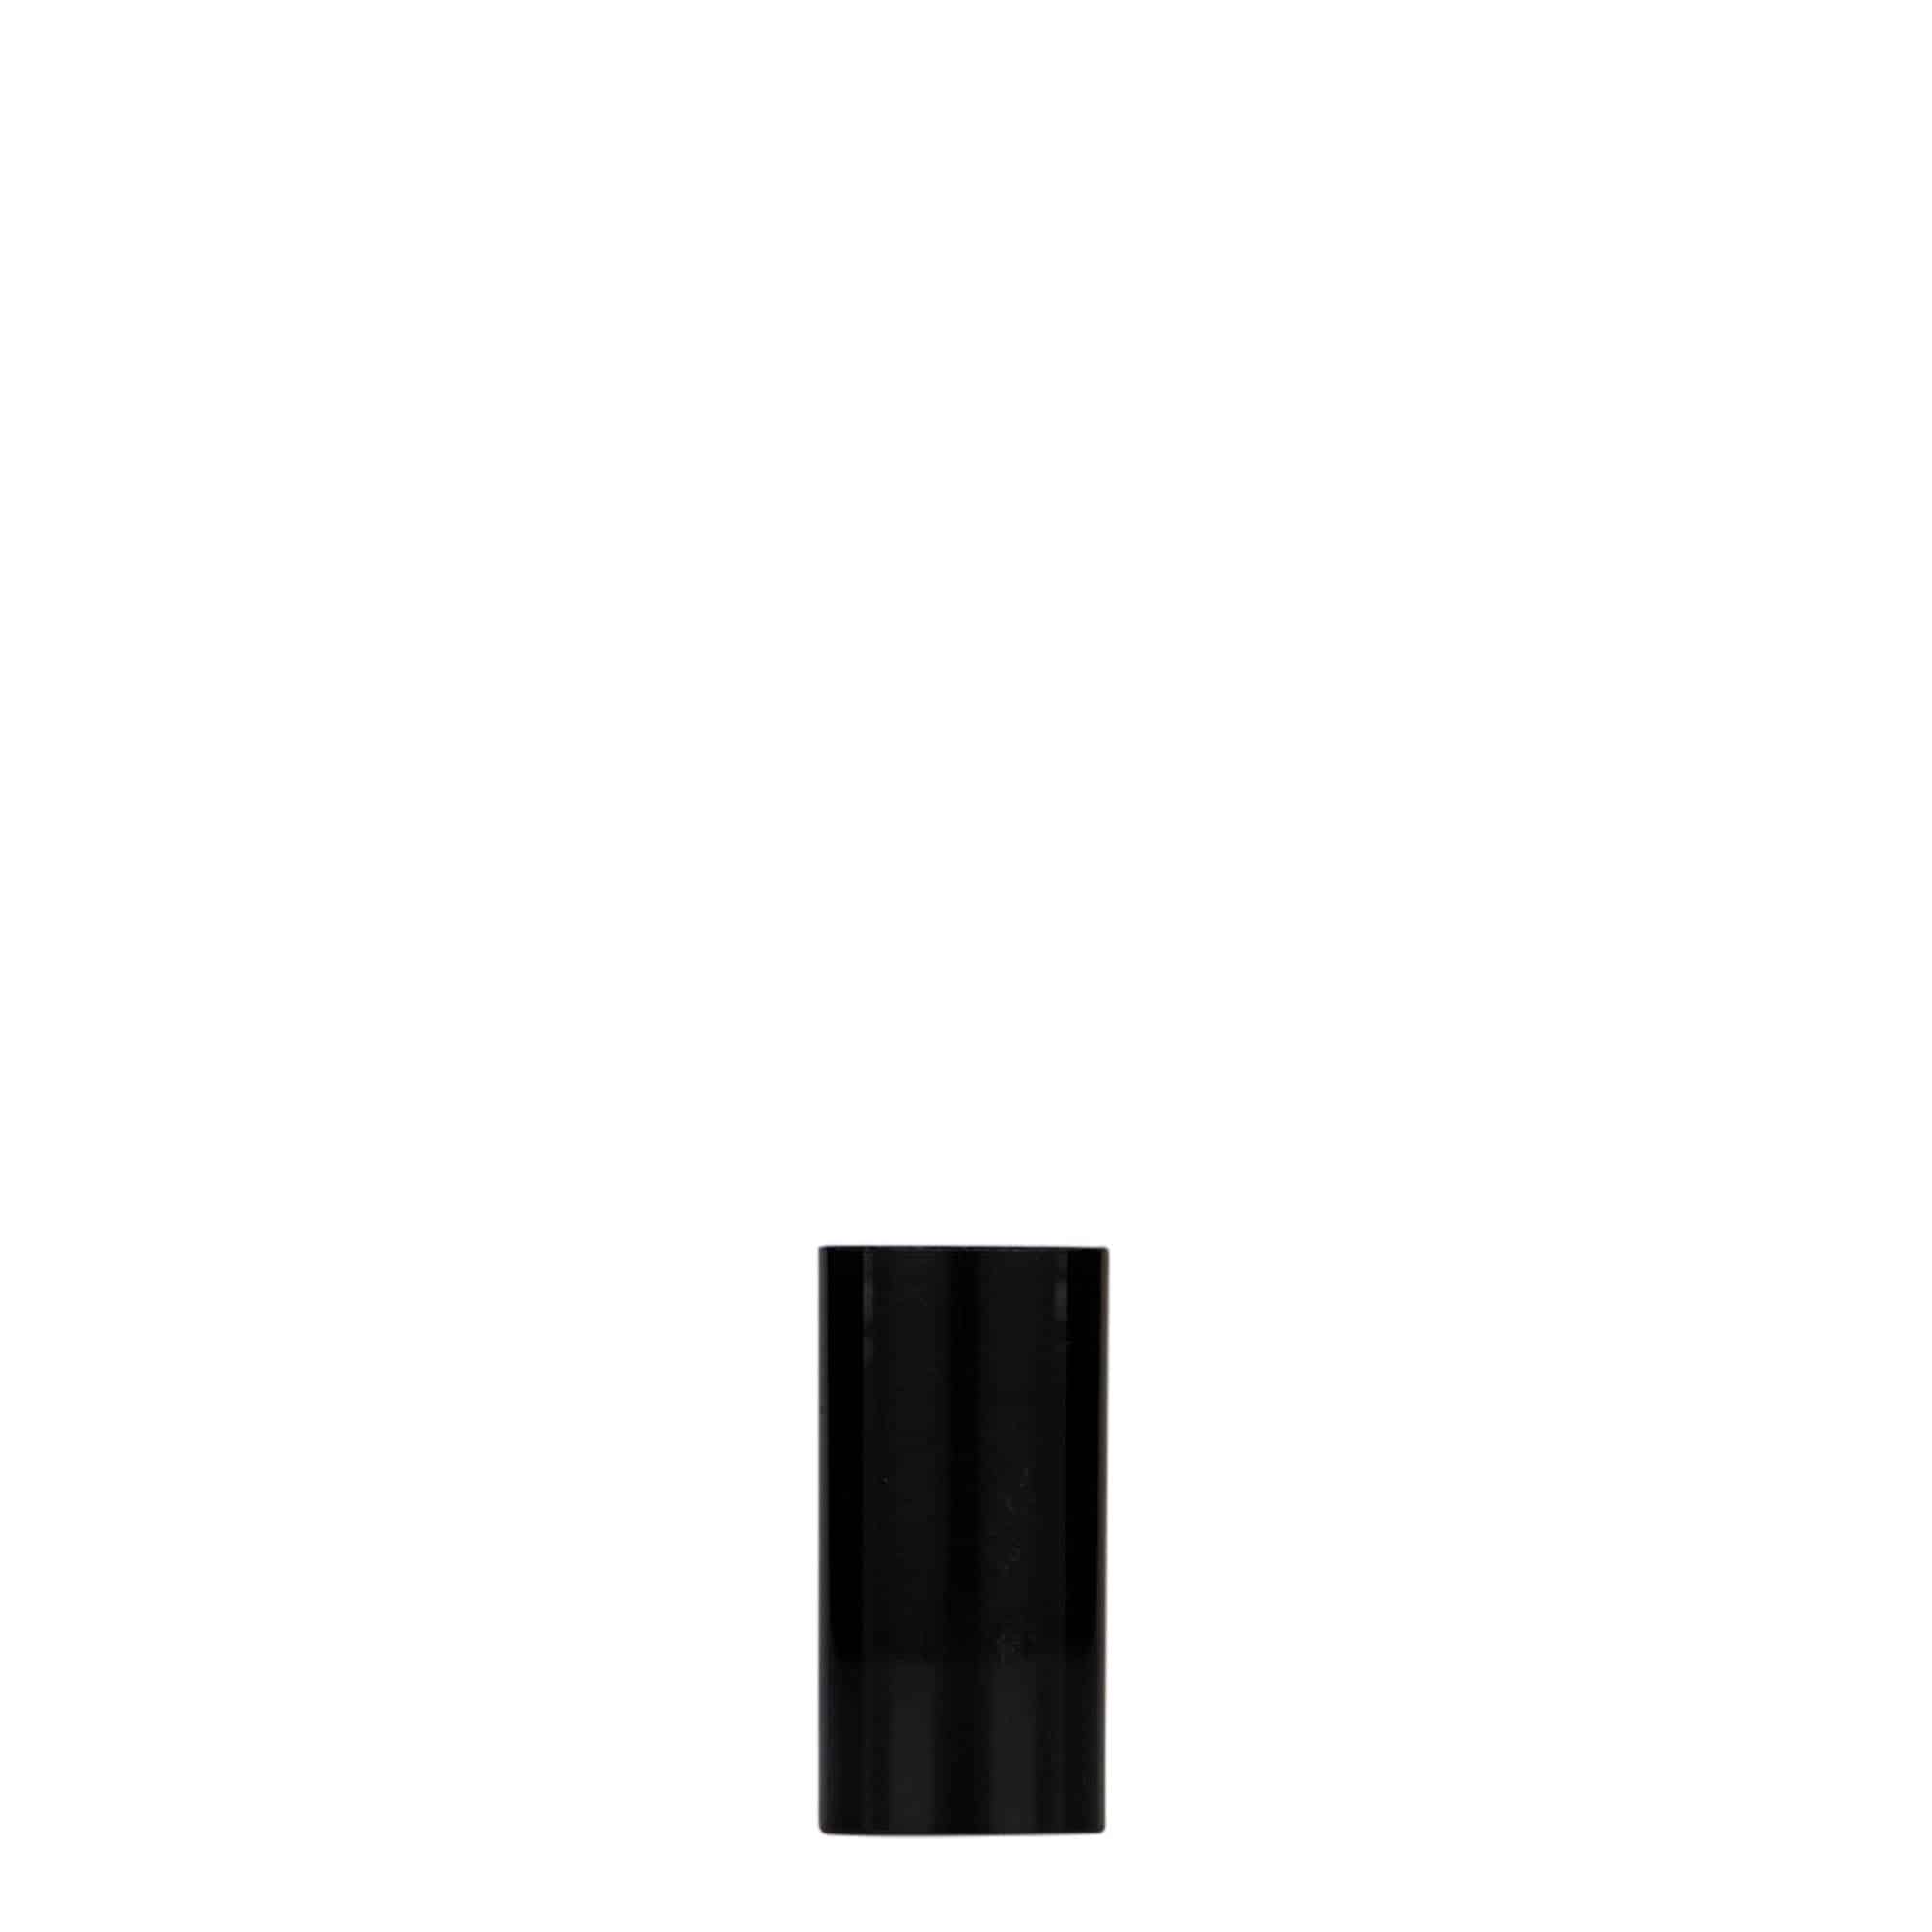 Flacon airless 5 ml 'Nano', plastique PP, noir